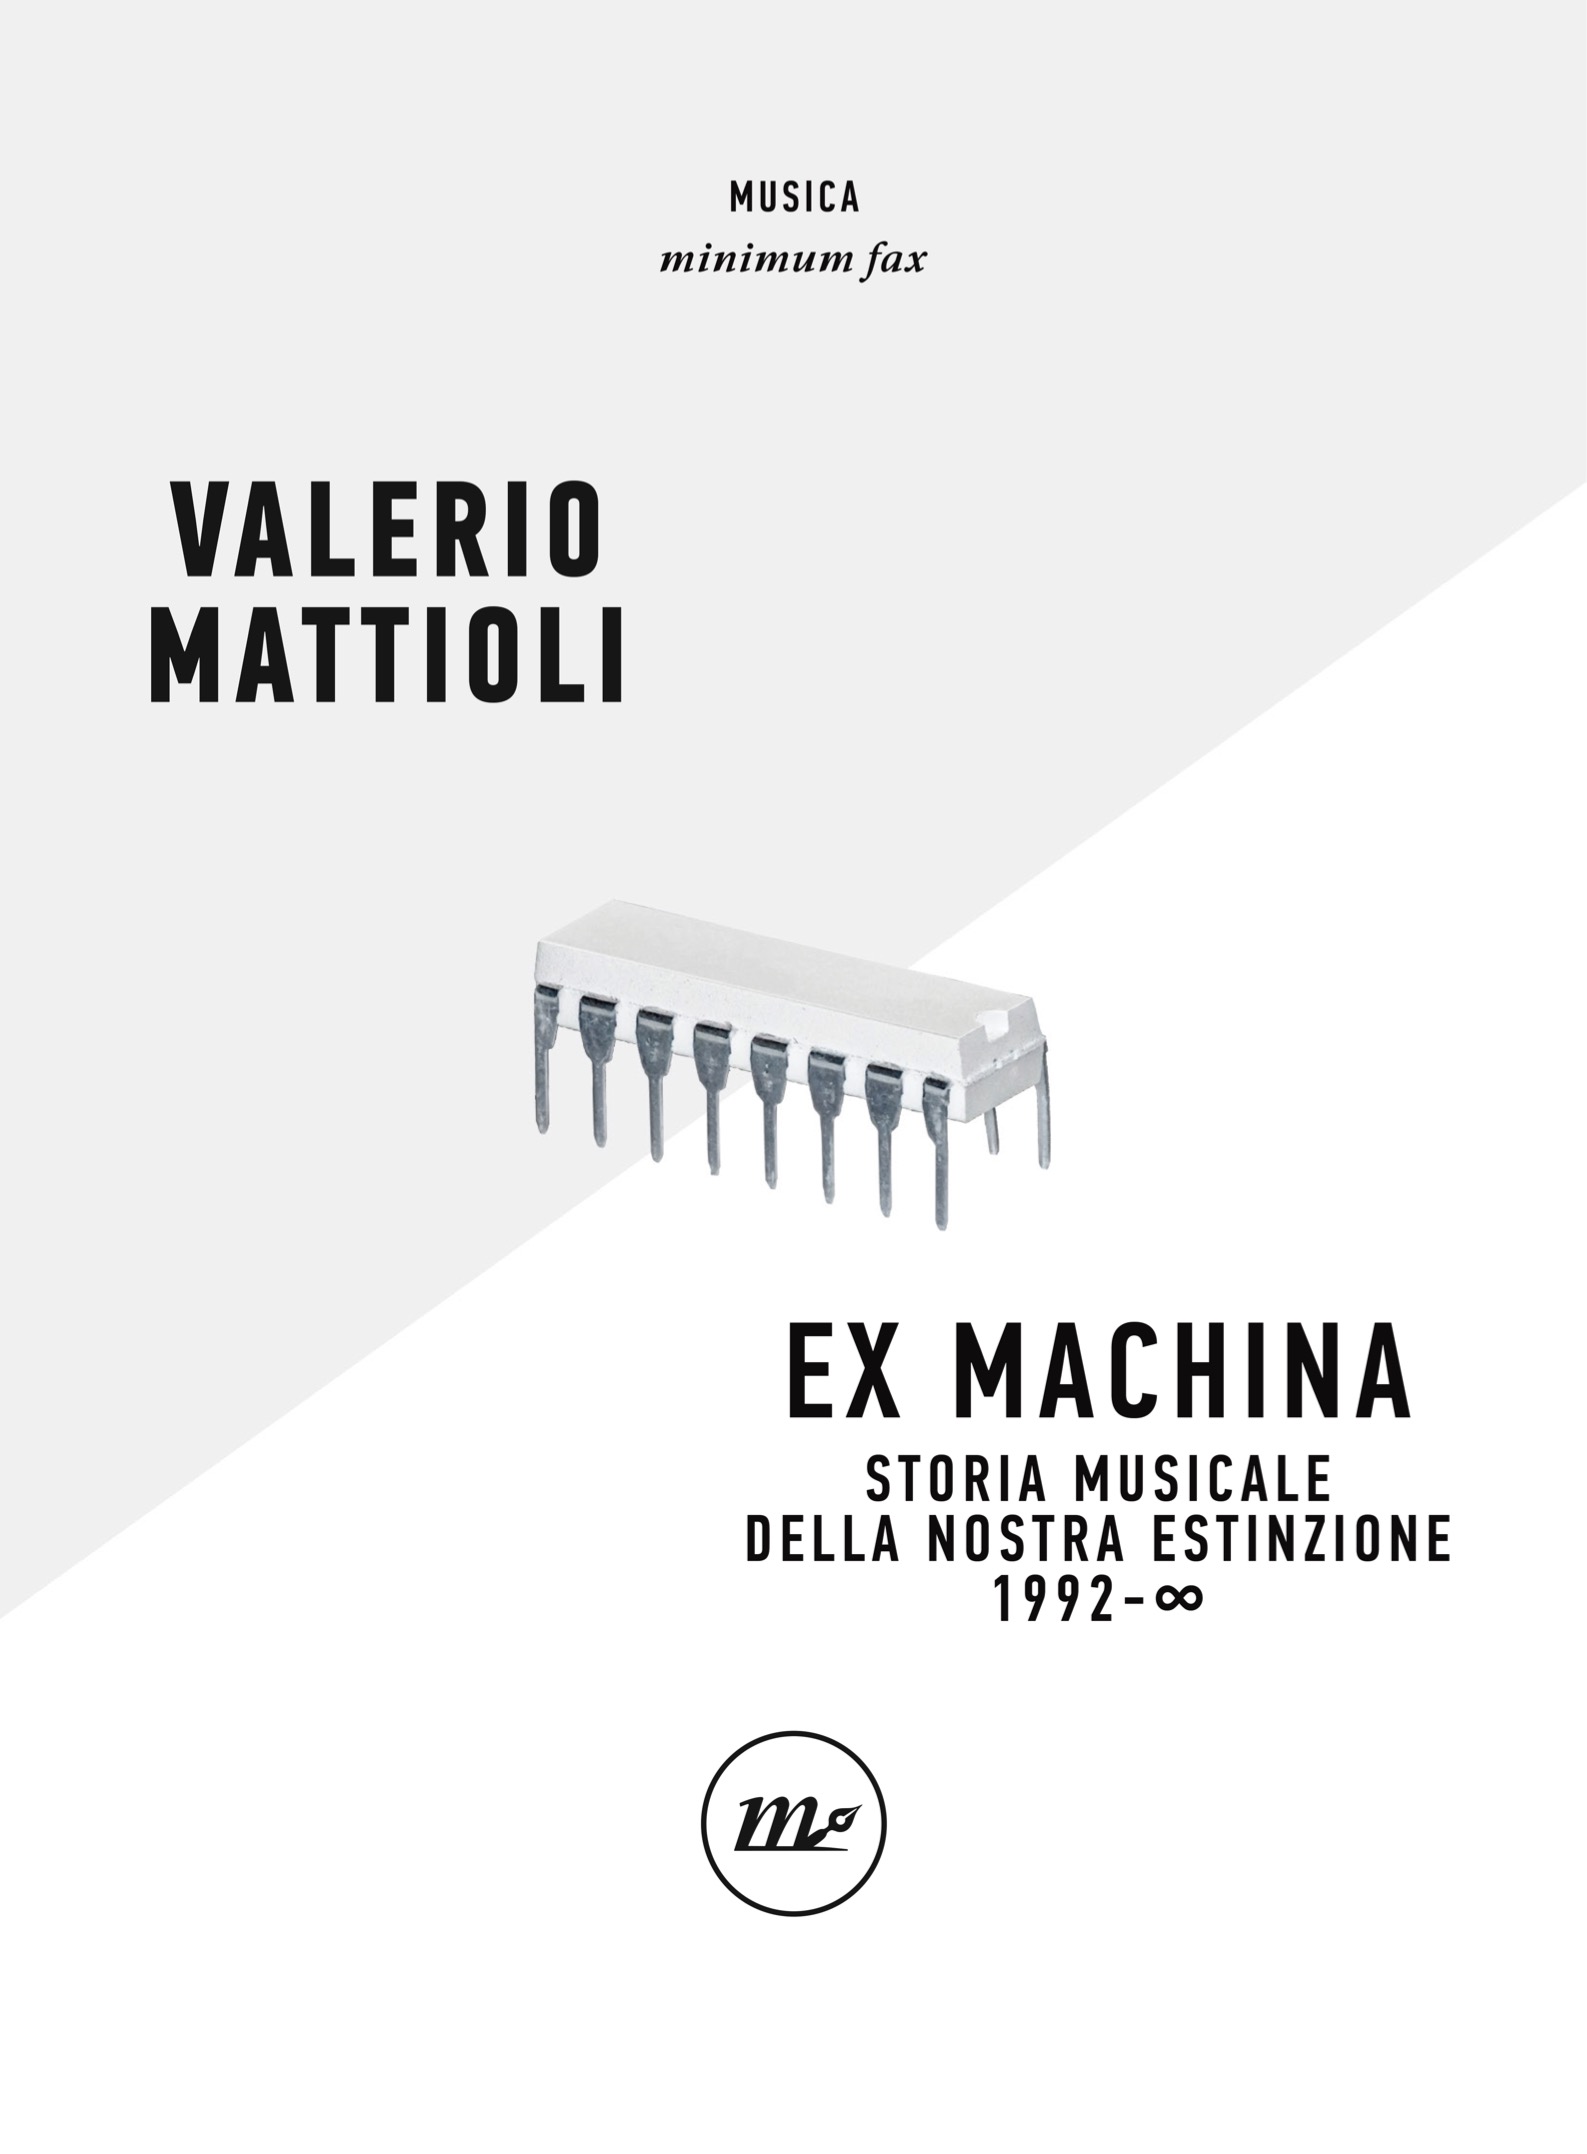 exmachina-valerio-mattioli-musica